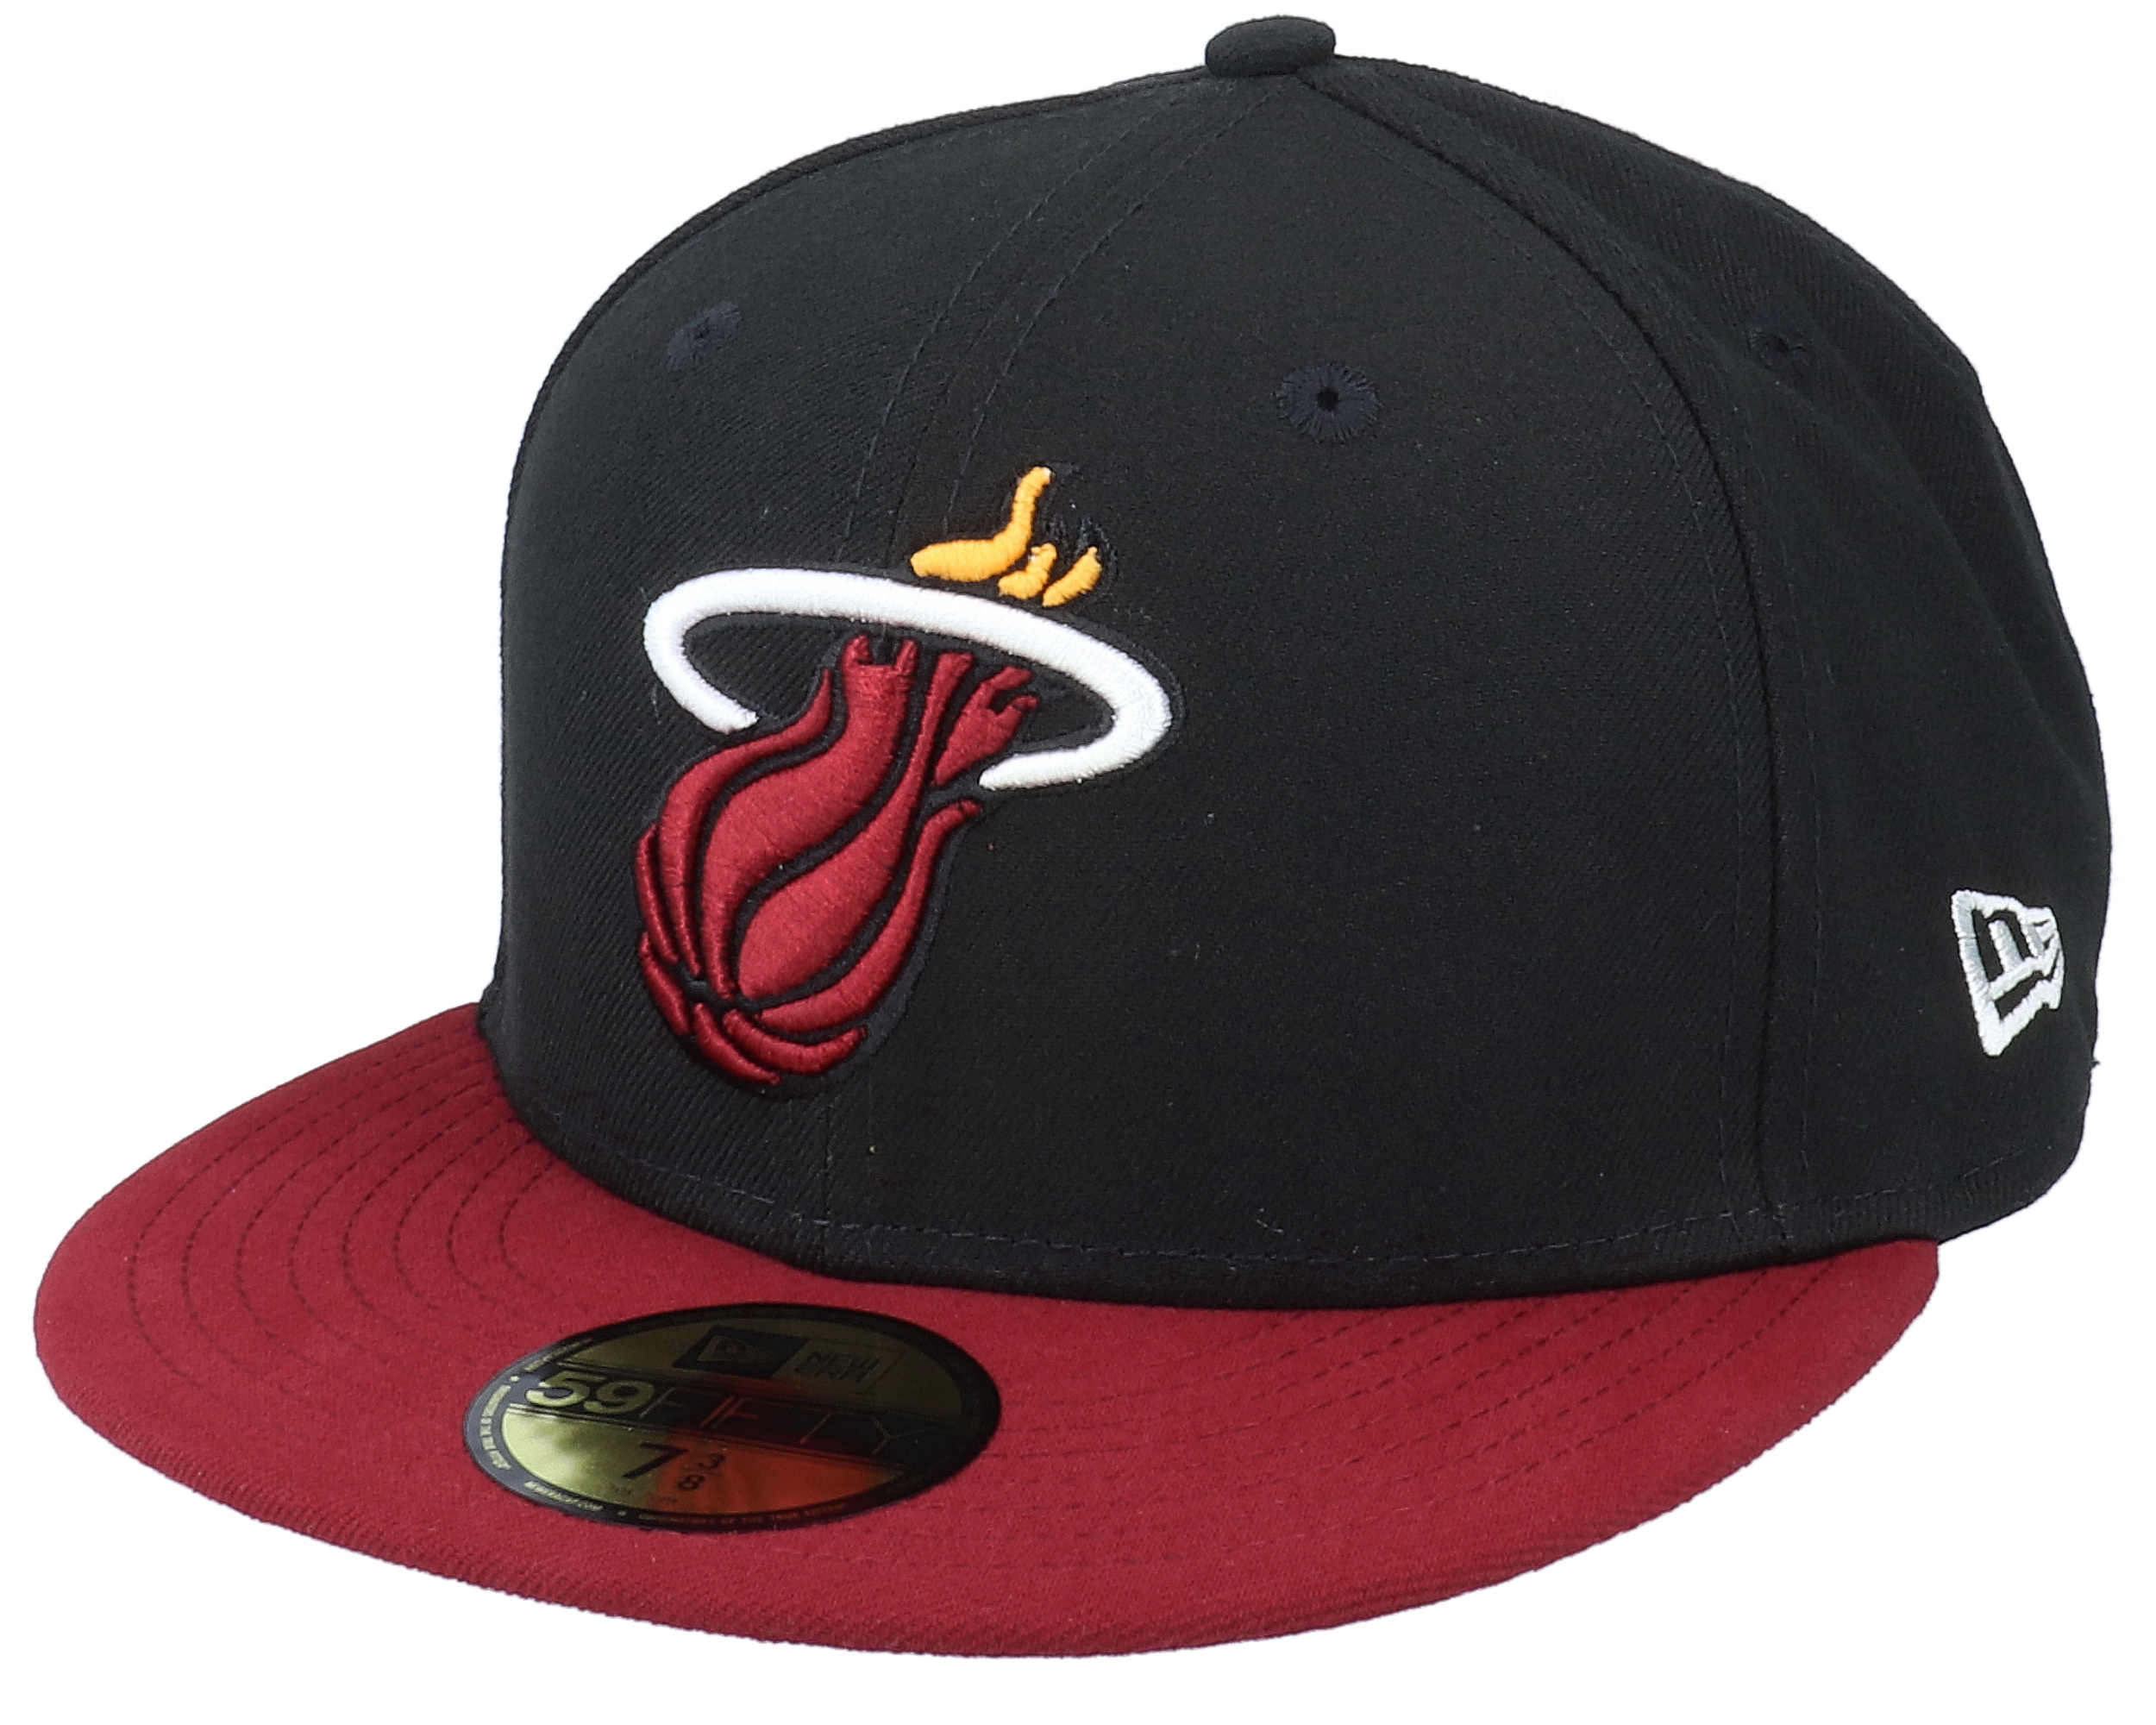 Miami Heat NBA Basic 59Fifty Black/Maroon Fitted - New Era caps 